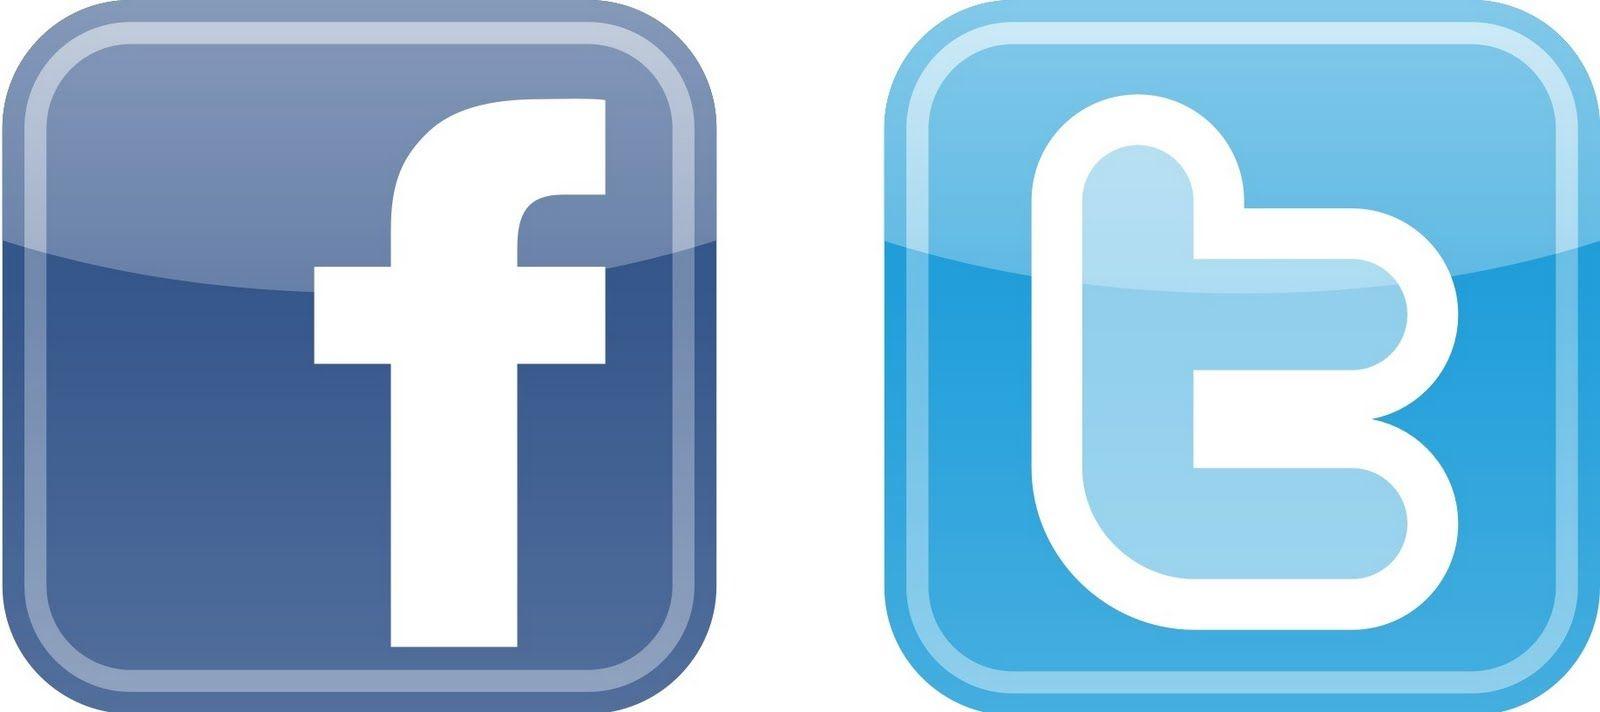 Facebook Twitter Logo - LogoDix